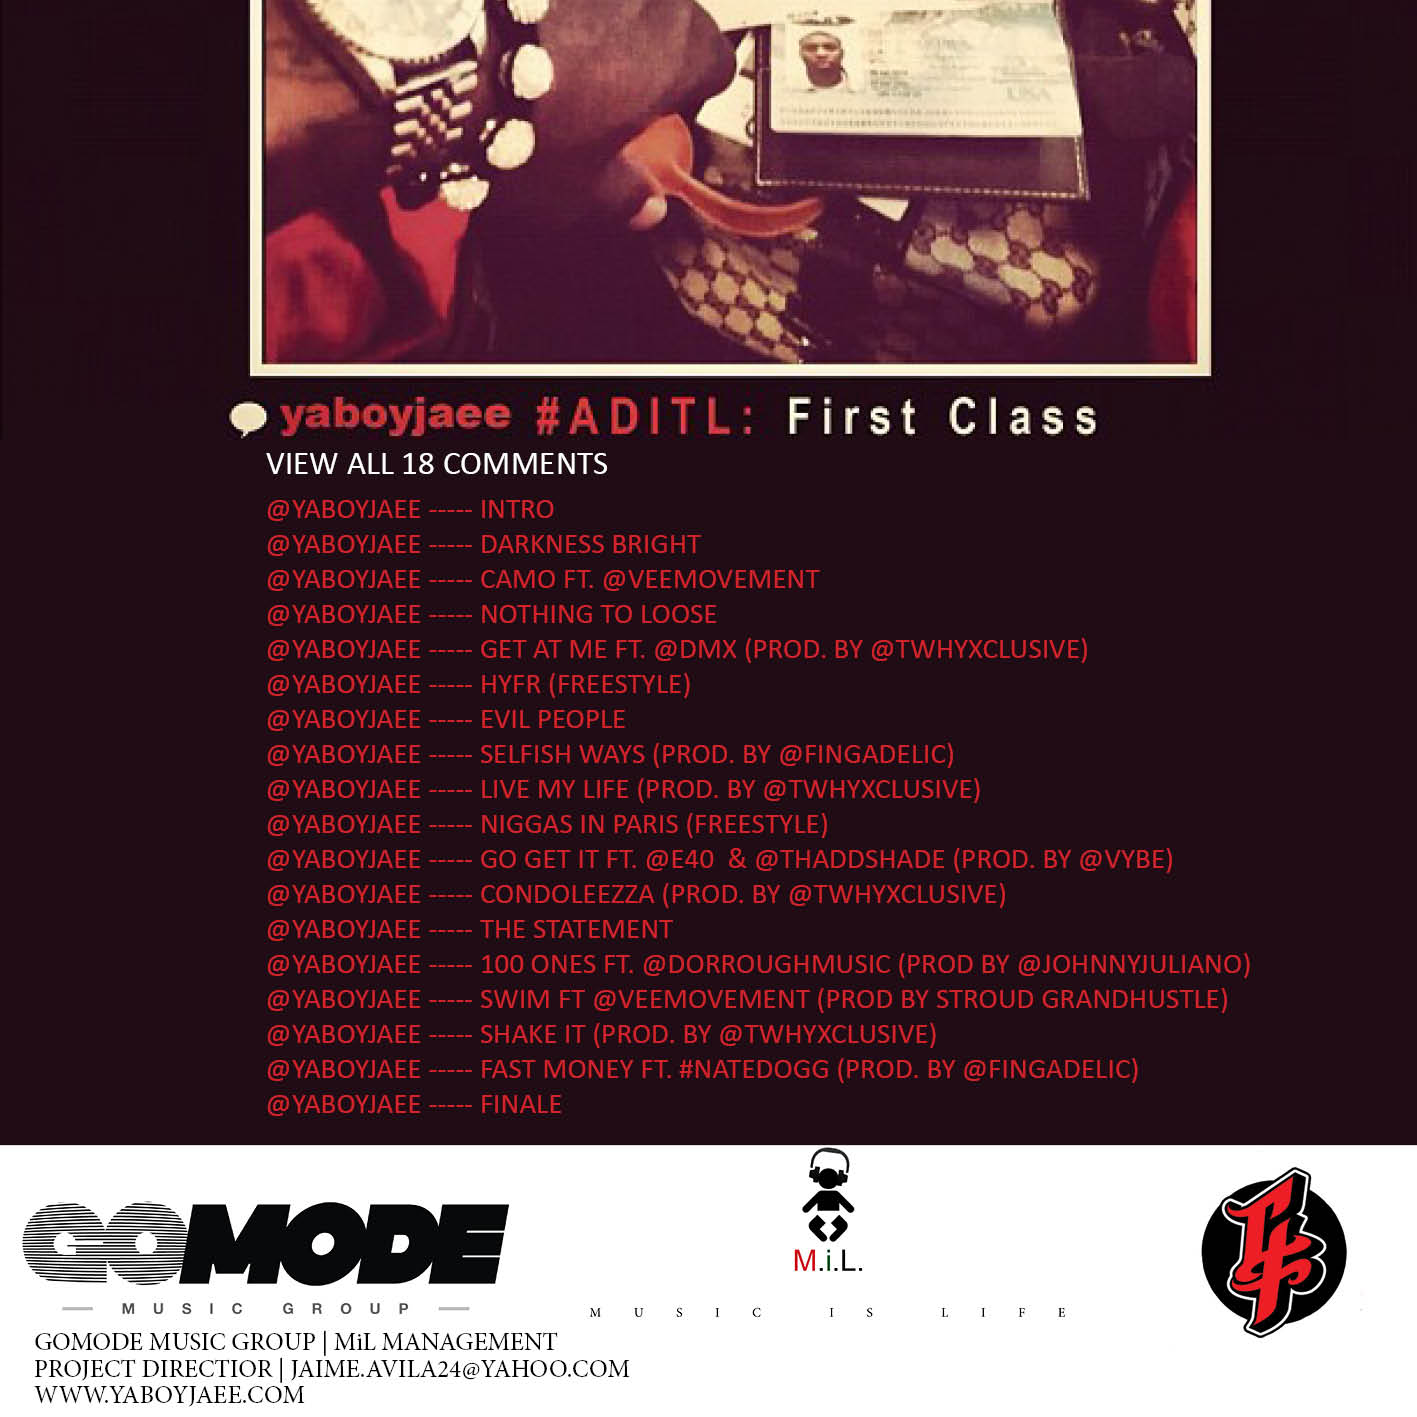 ADITLTrackList JAE E (@yaboyjaee) - ADITL: First Class (Tracklist) 